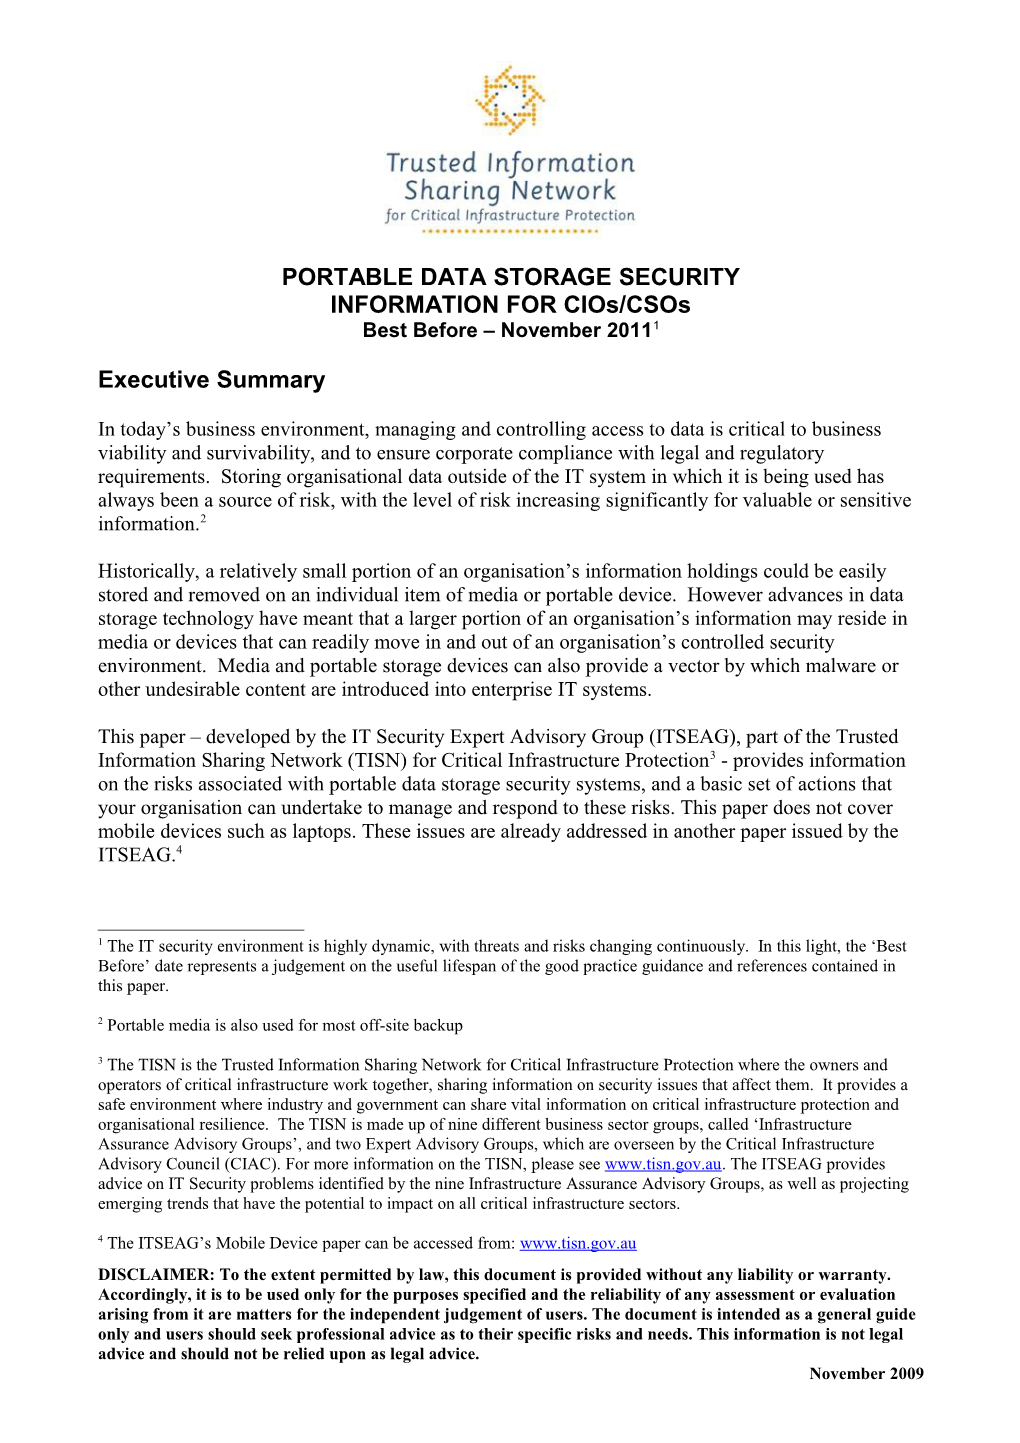 Portable Data Storage Device Security CIO Paper DOC 89KB